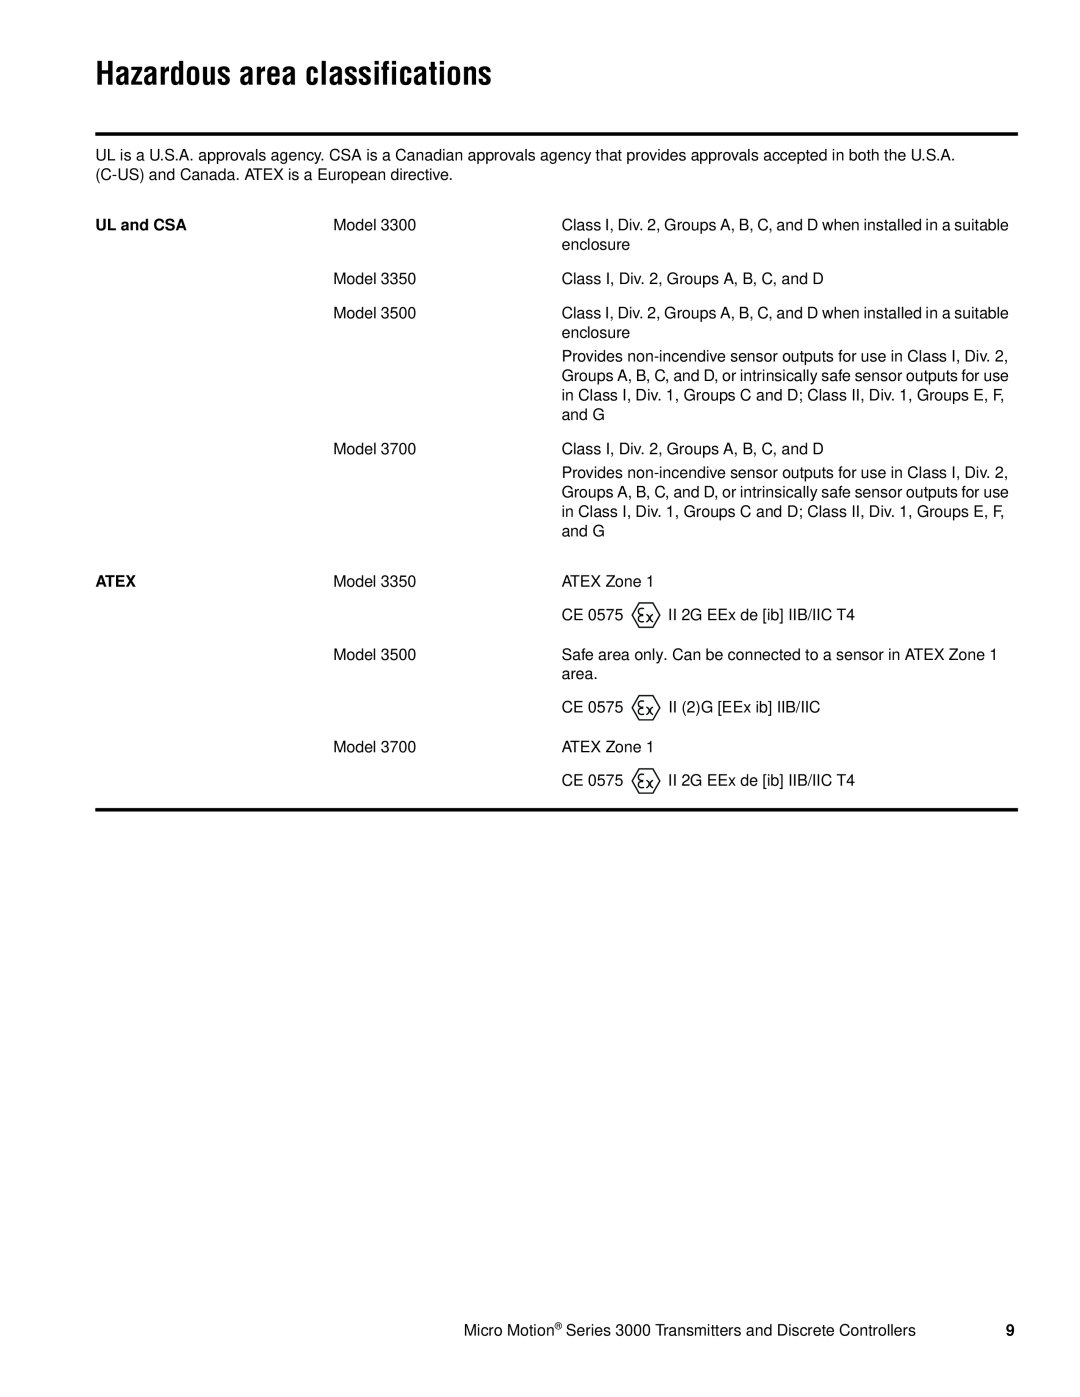 Emerson Series 3000 manual Hazardous area classifications, UL and CSA, Atex 